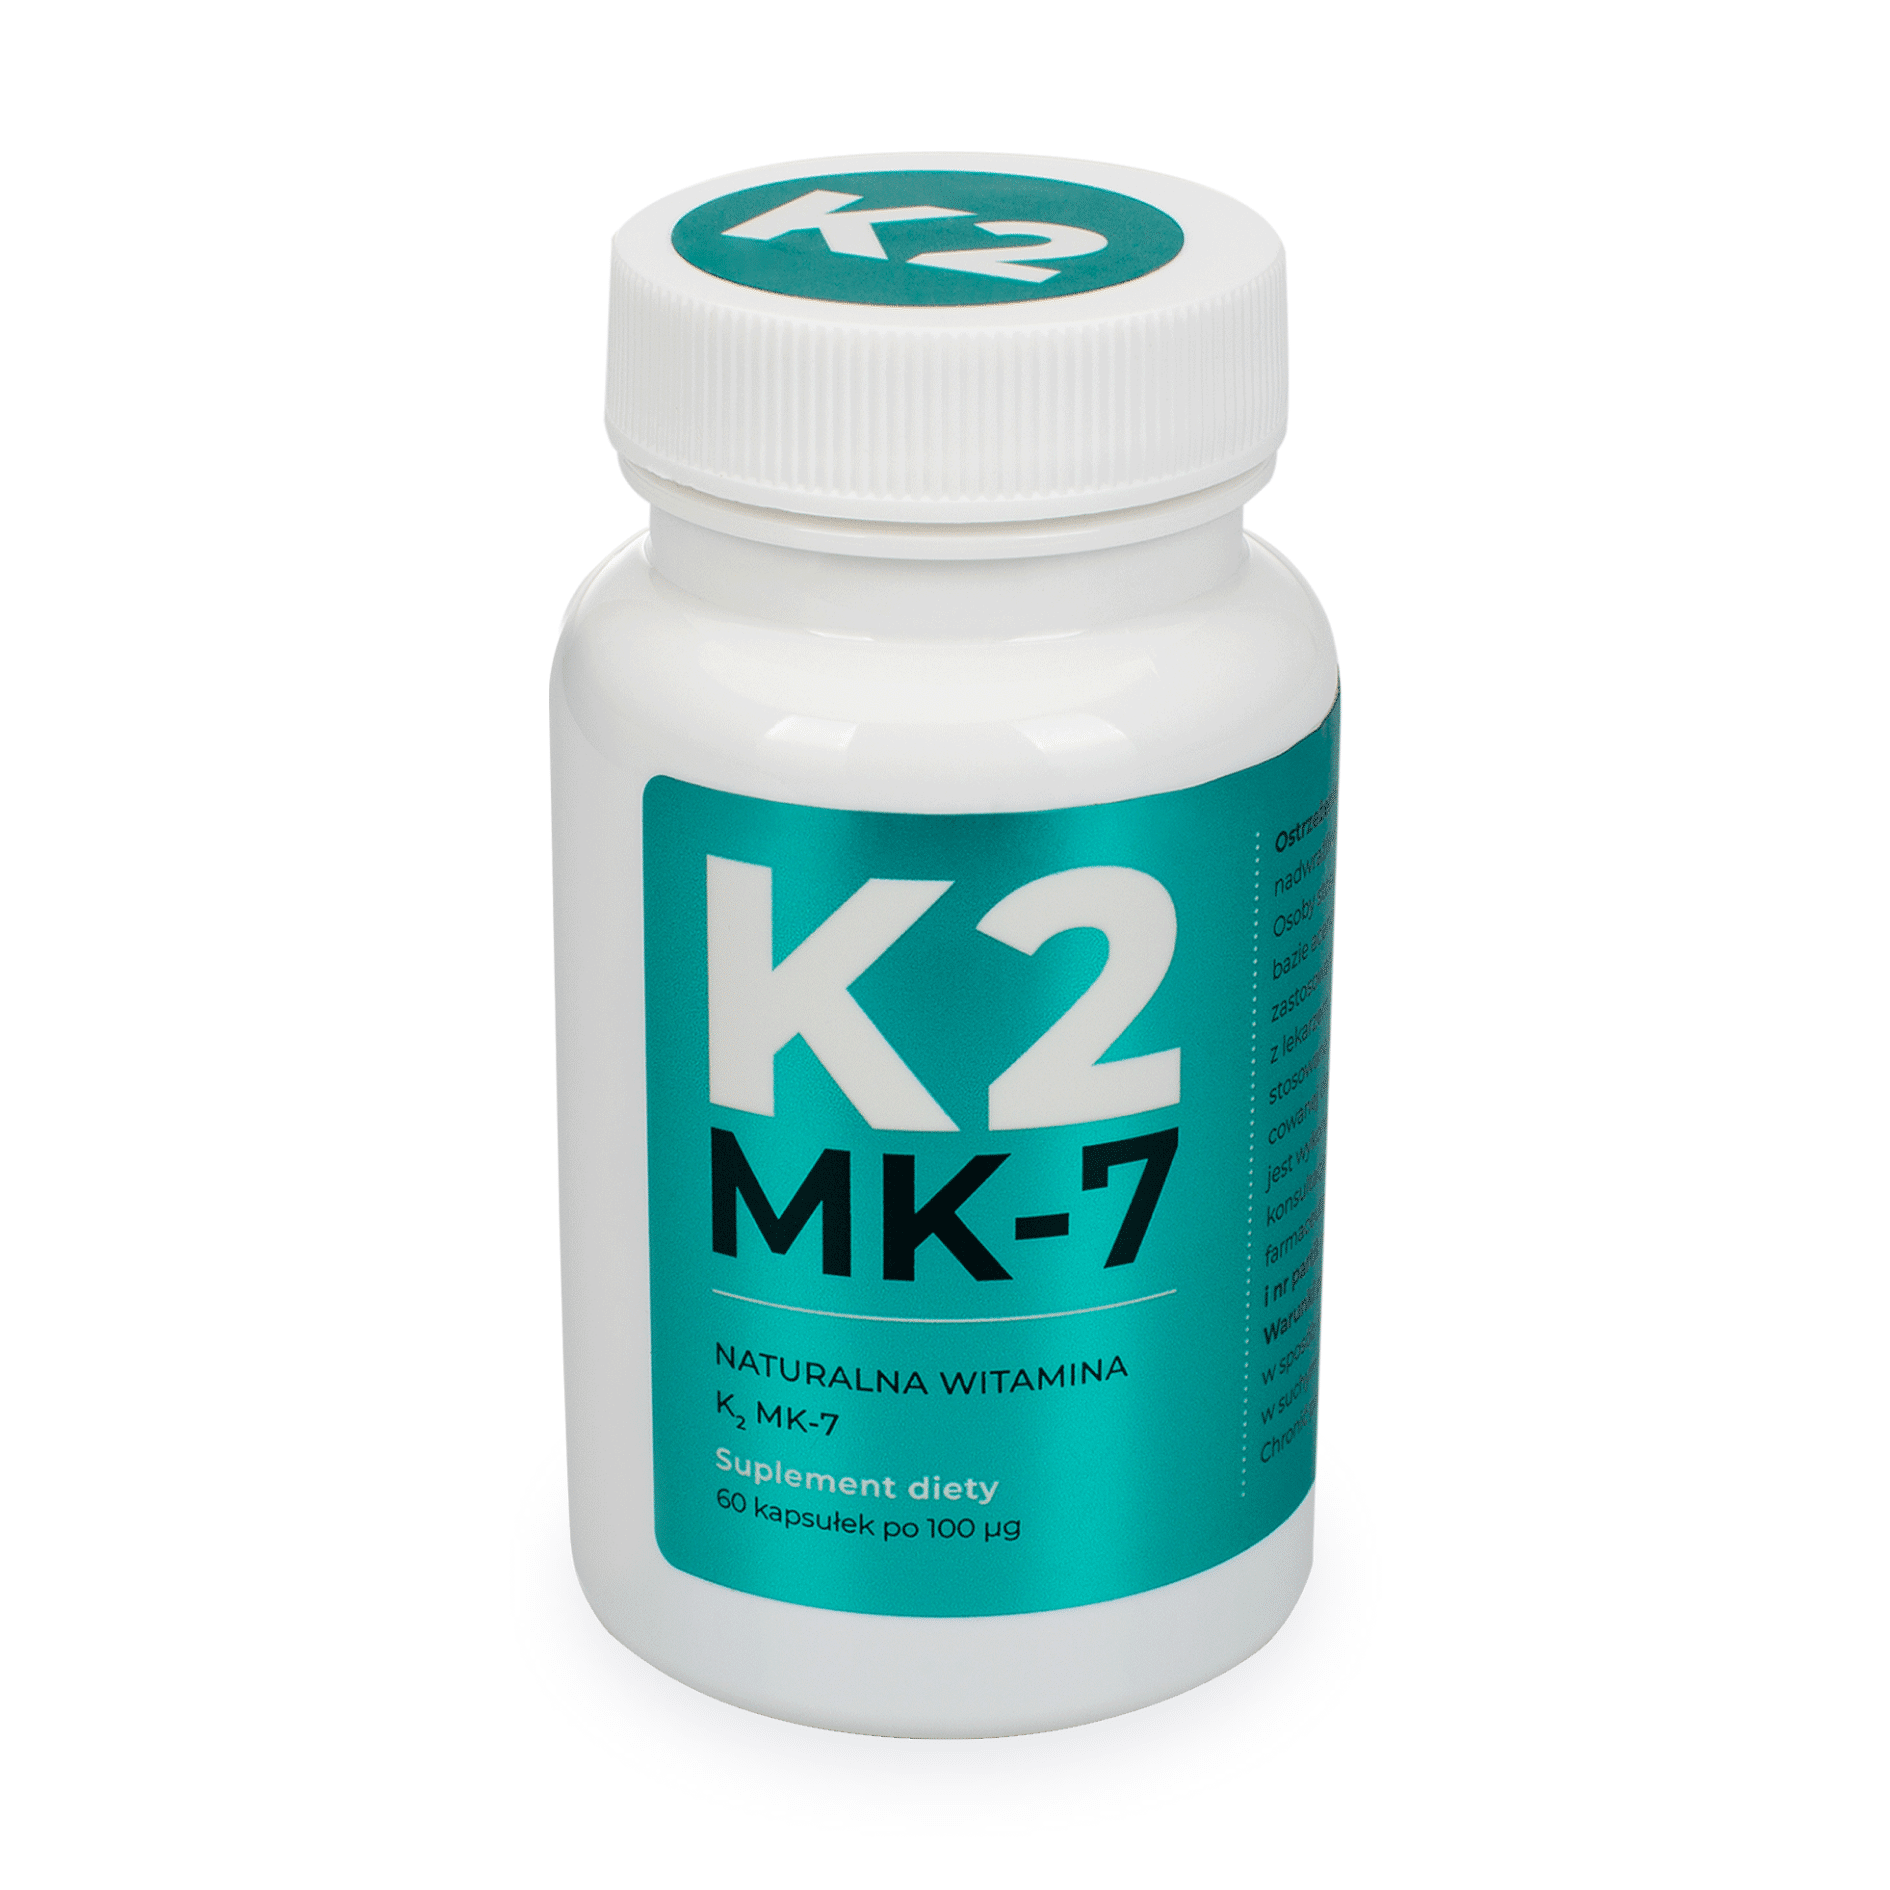 K2 Mk-7 100mcg - naturalna witamina